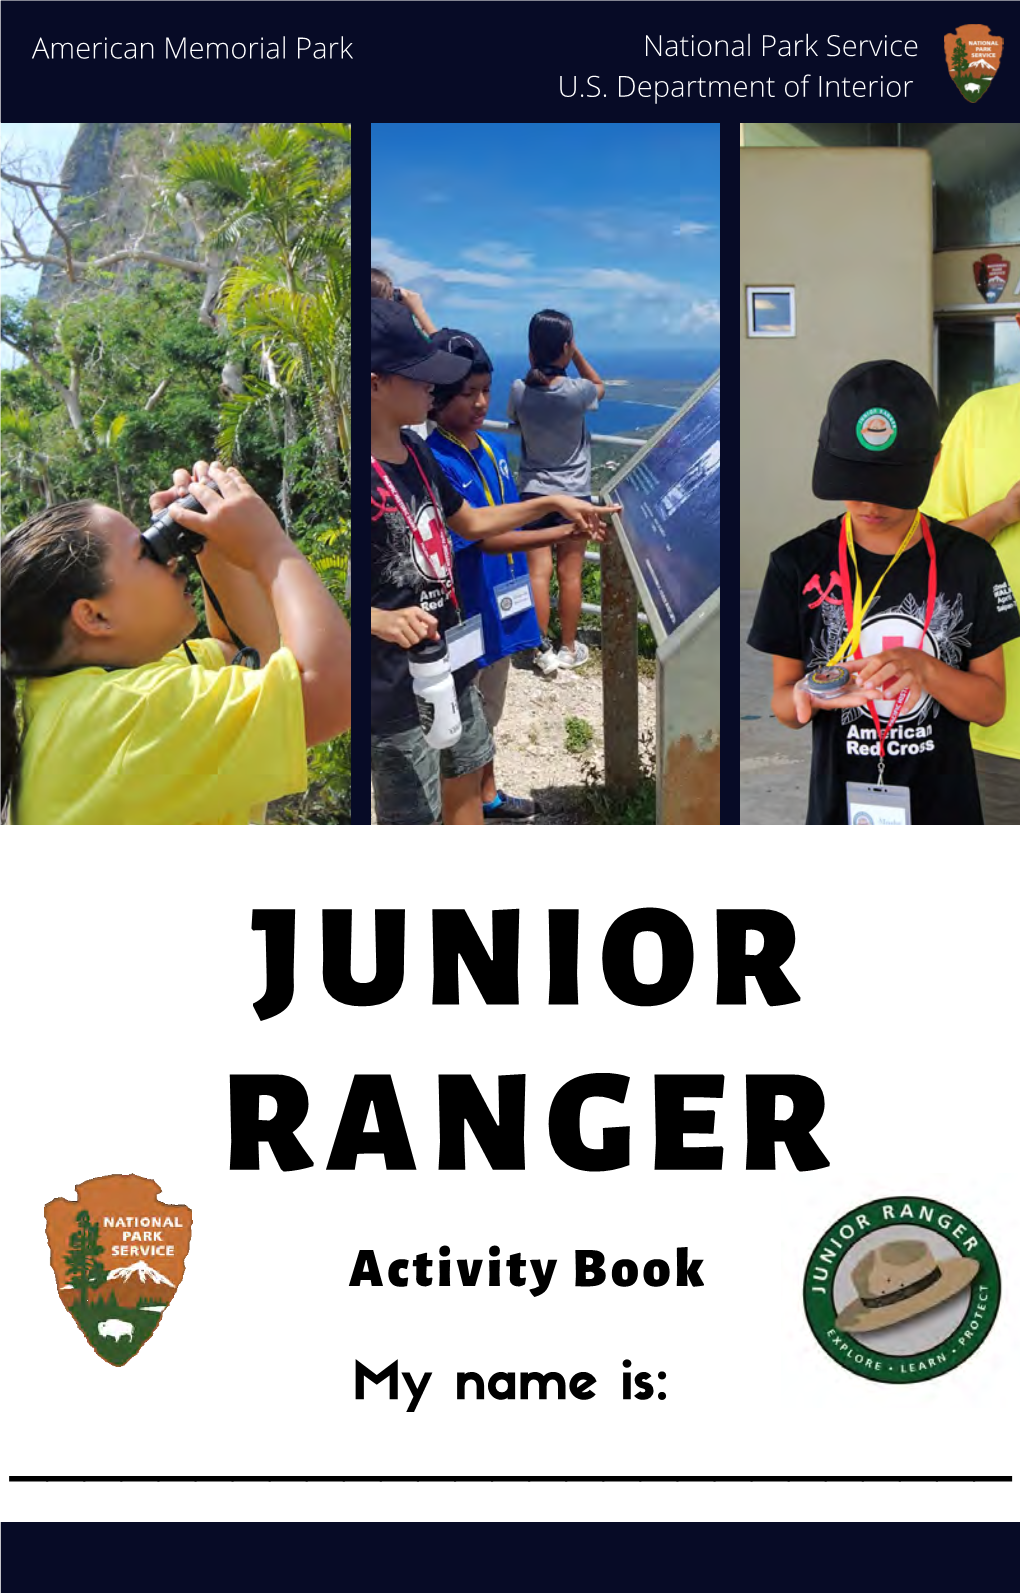 JUNIOR RANGER Activity Book My Name Is: ______Junior Ranger!